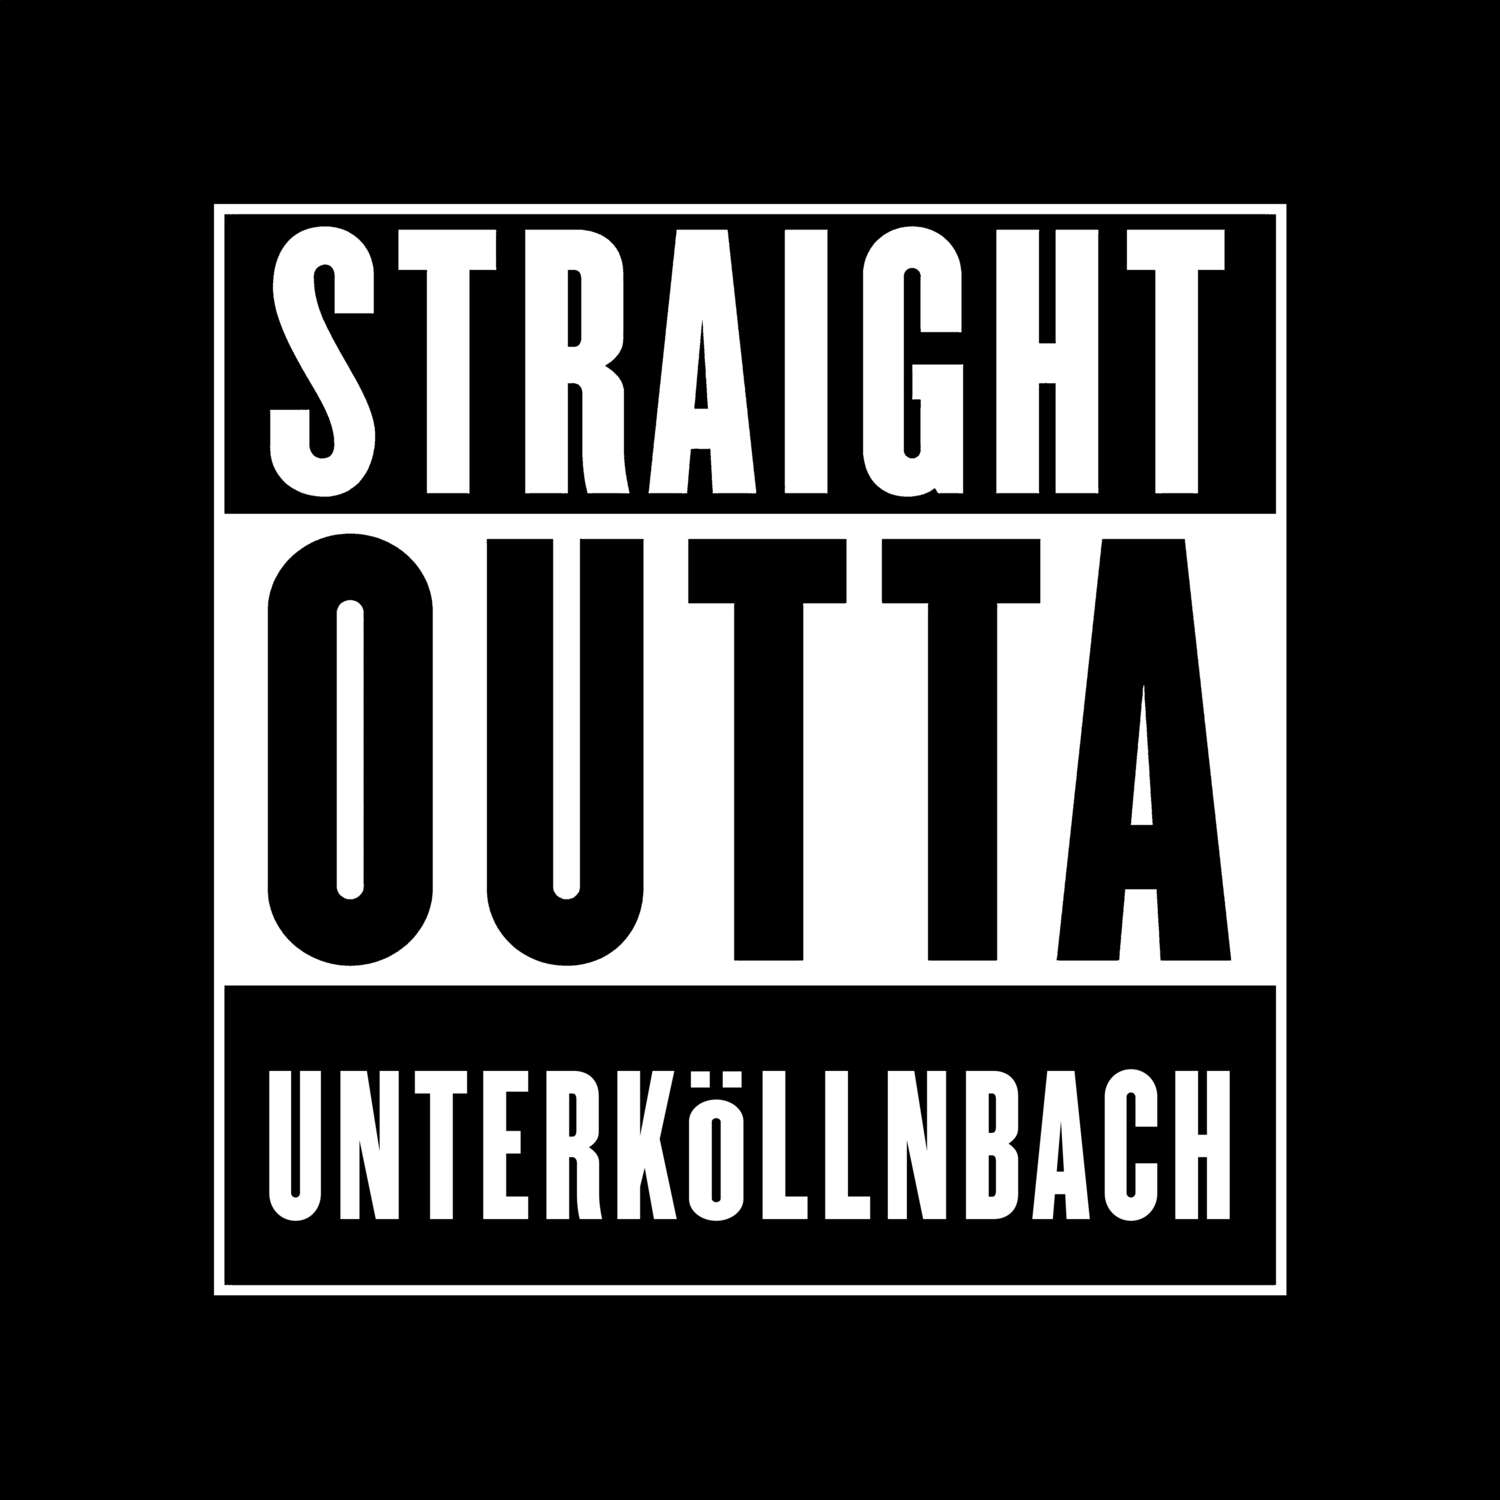 Unterköllnbach T-Shirt »Straight Outta«